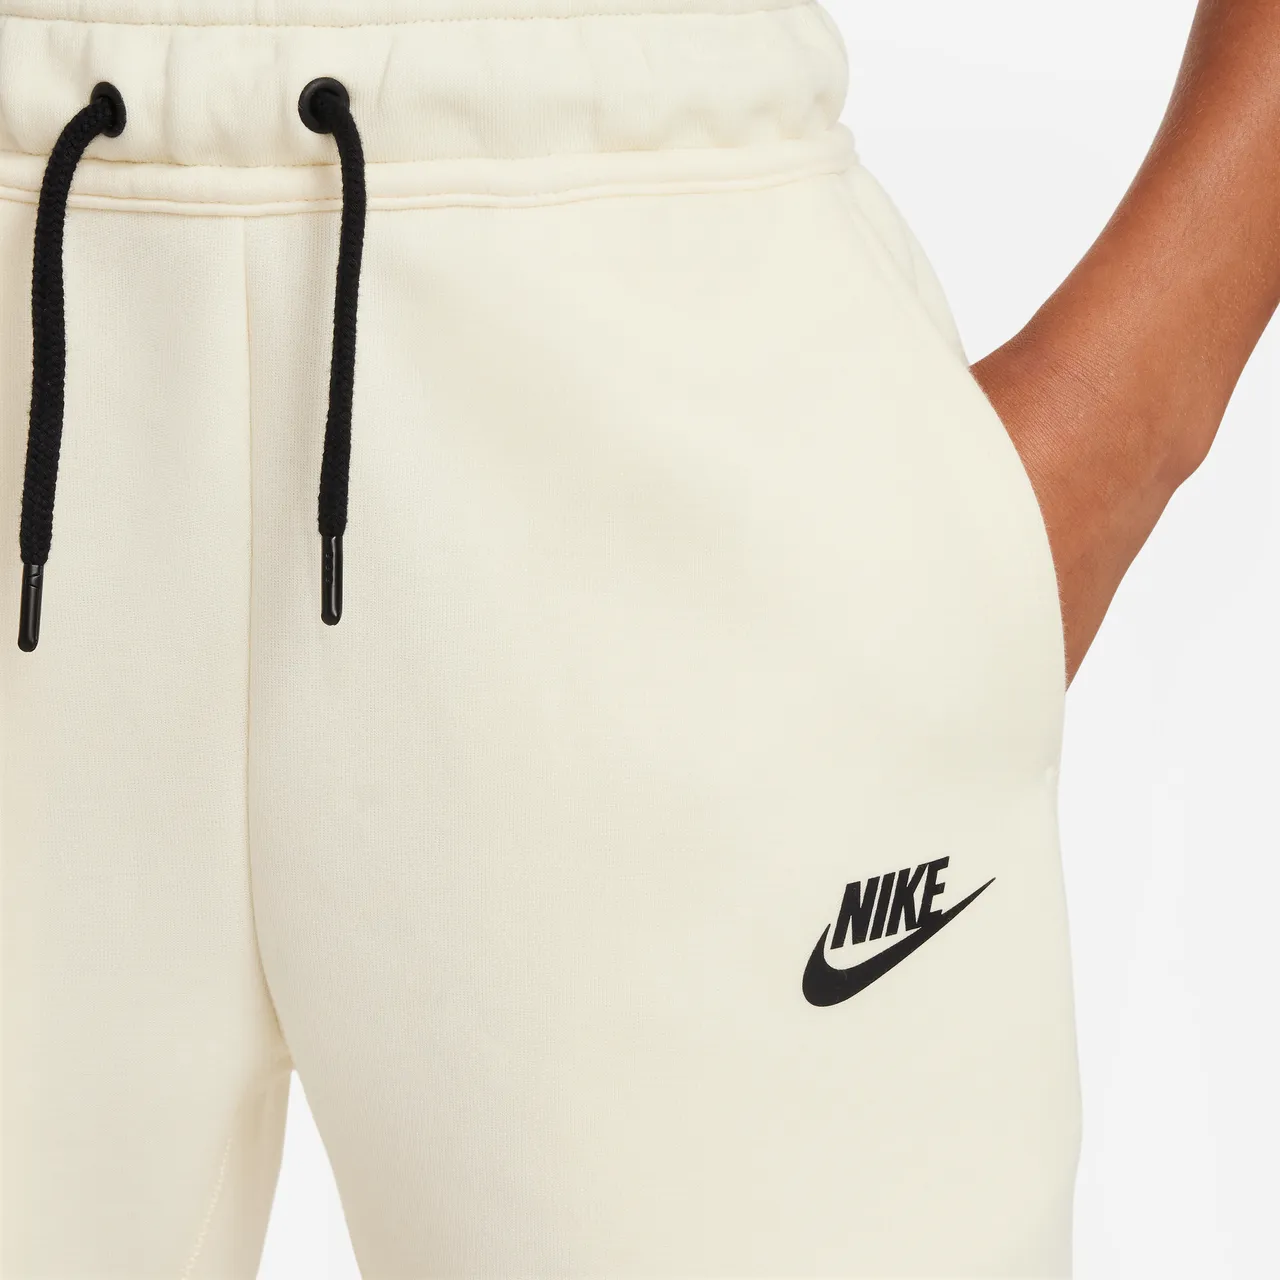 Nike Sportswear Tech Fleece Hose für ältere Kinder (Jungen) - Weiß